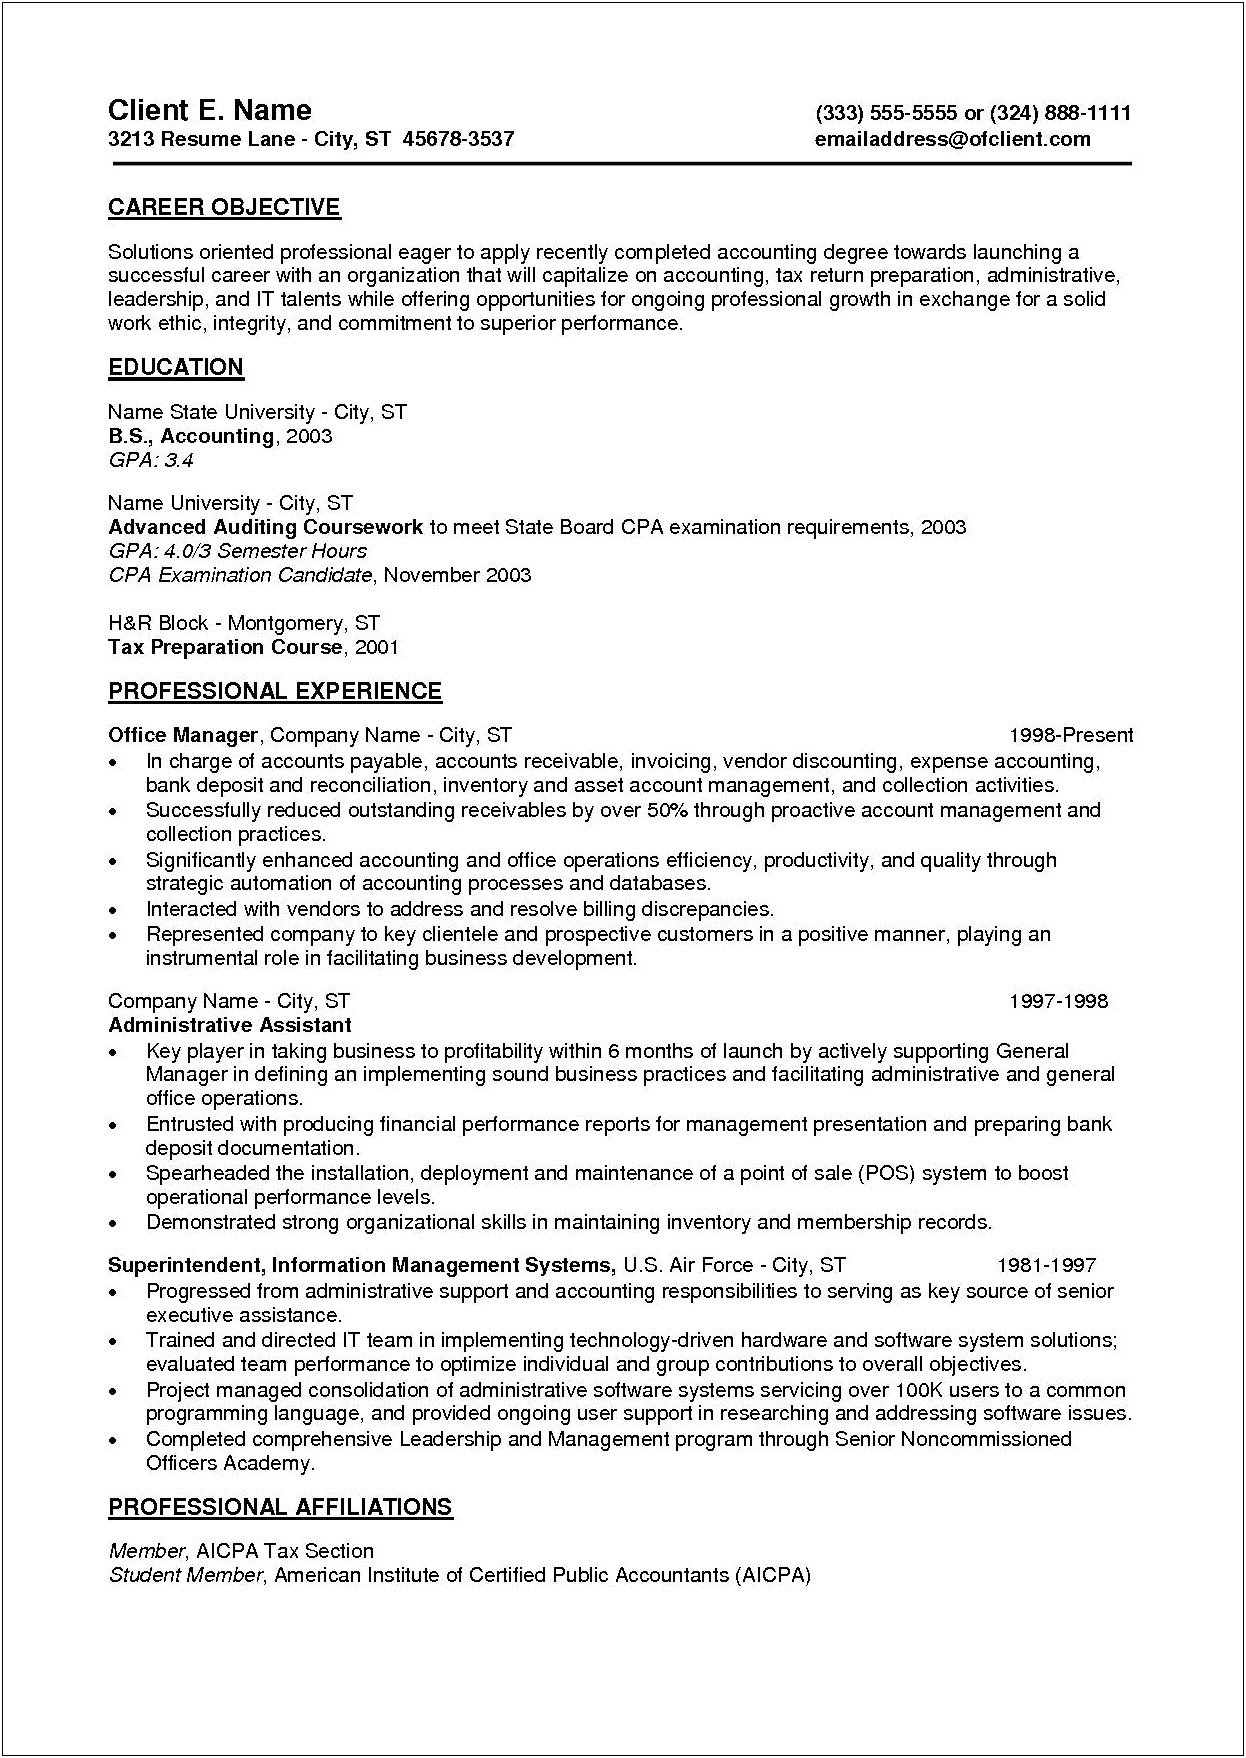 Sample Resume Objectives For Entry Level Jobs